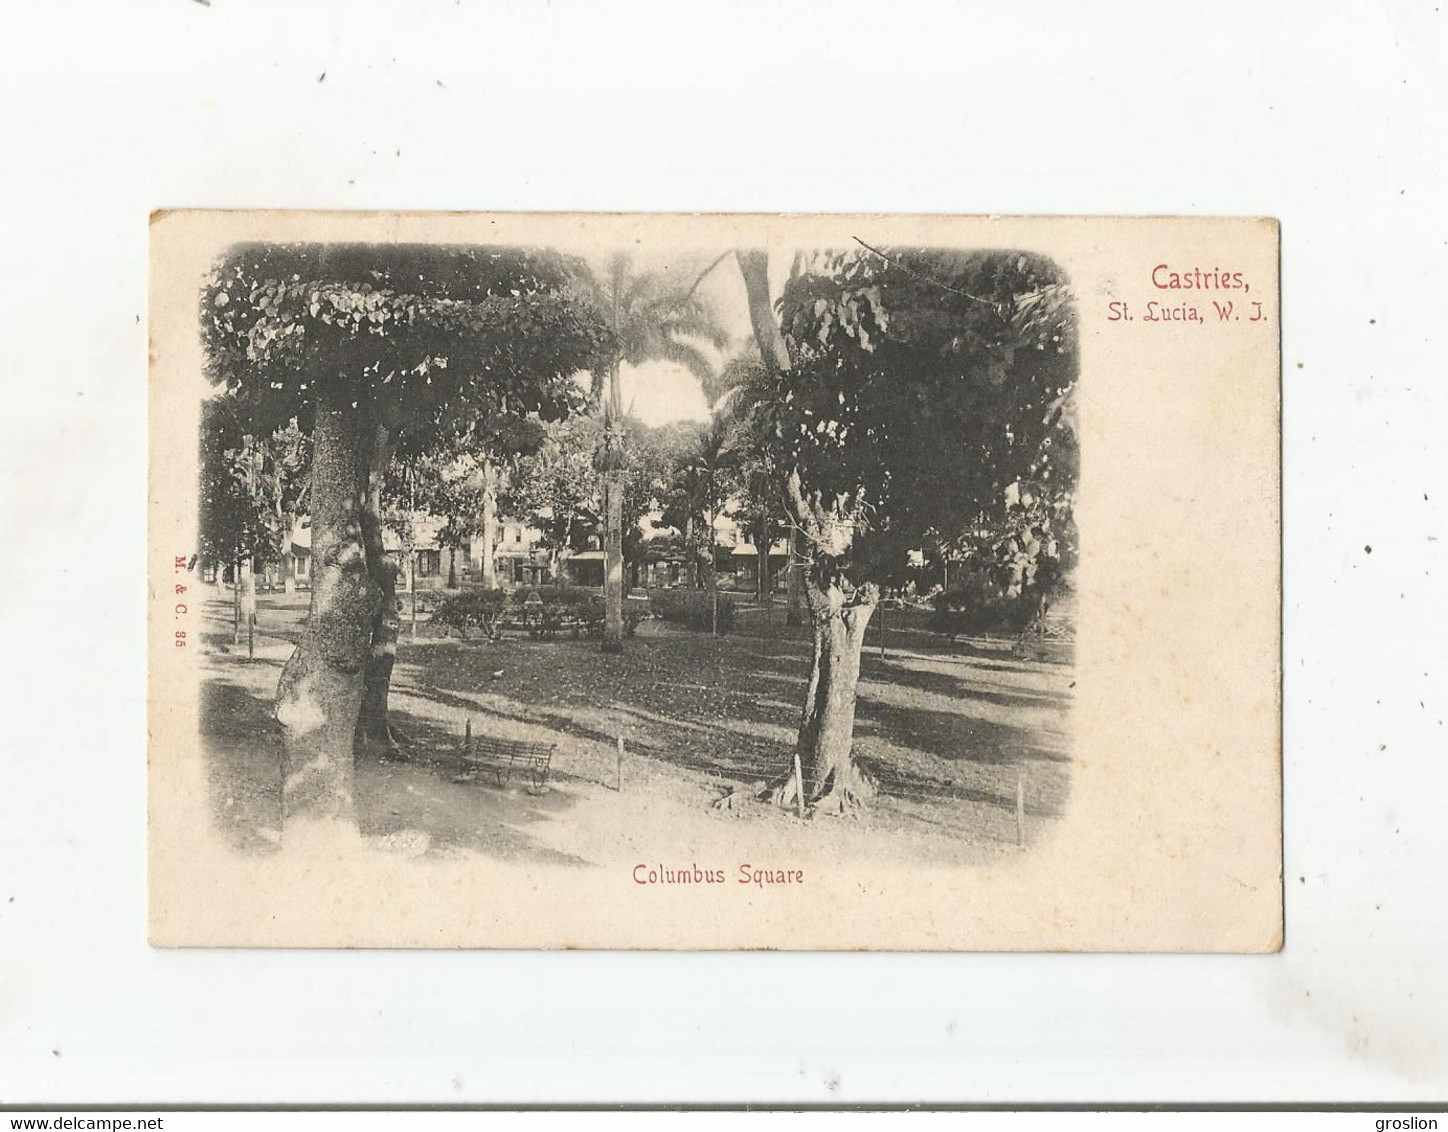 CASTRIES 35  ST LUCIA W J  COLUMBUS SQUARE 1916 - St. Lucia